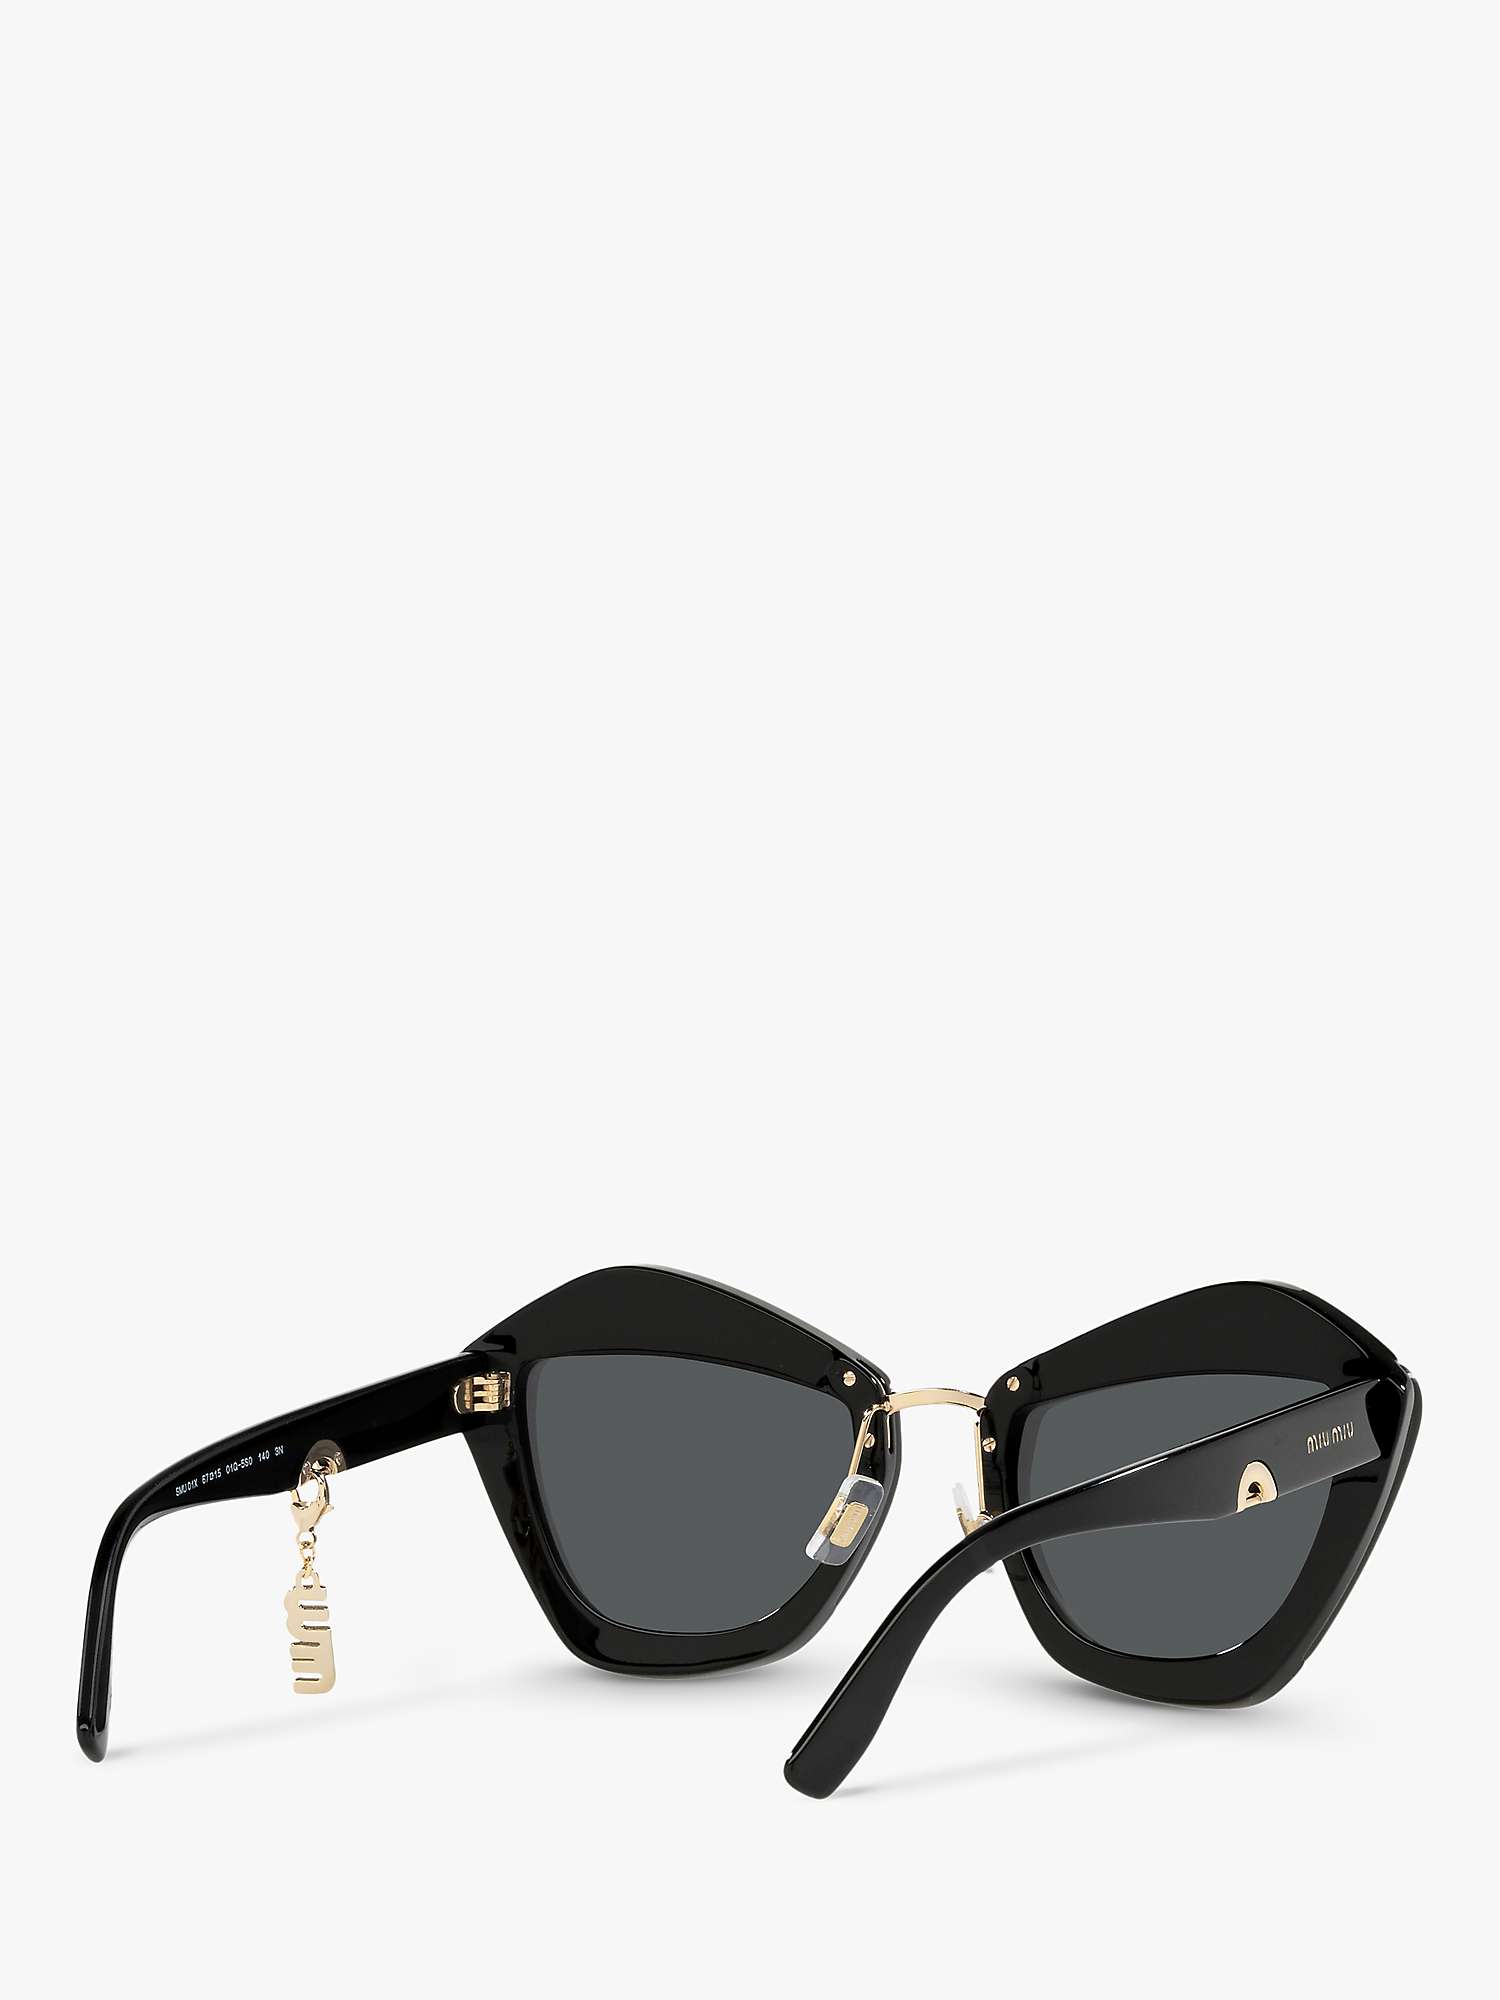 Buy Miu Miu MU 01XS Women's Butterfly Sunglasses, Black/Grey Online at johnlewis.com